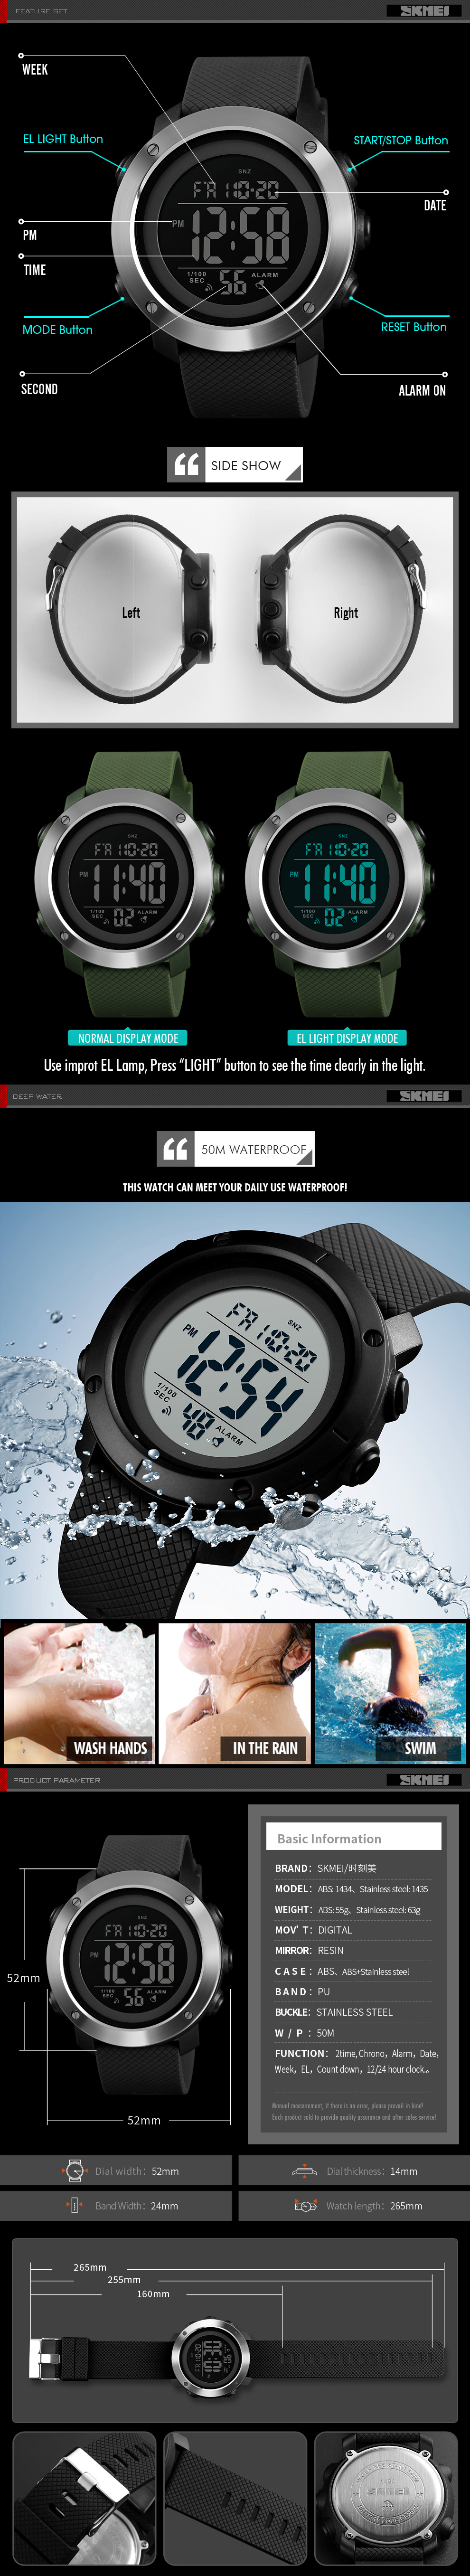 SKMEI 1434 Men Sports Outdoor Stopwatch Countdown Alarm Waterproof Wristwatch Relogio Masculino